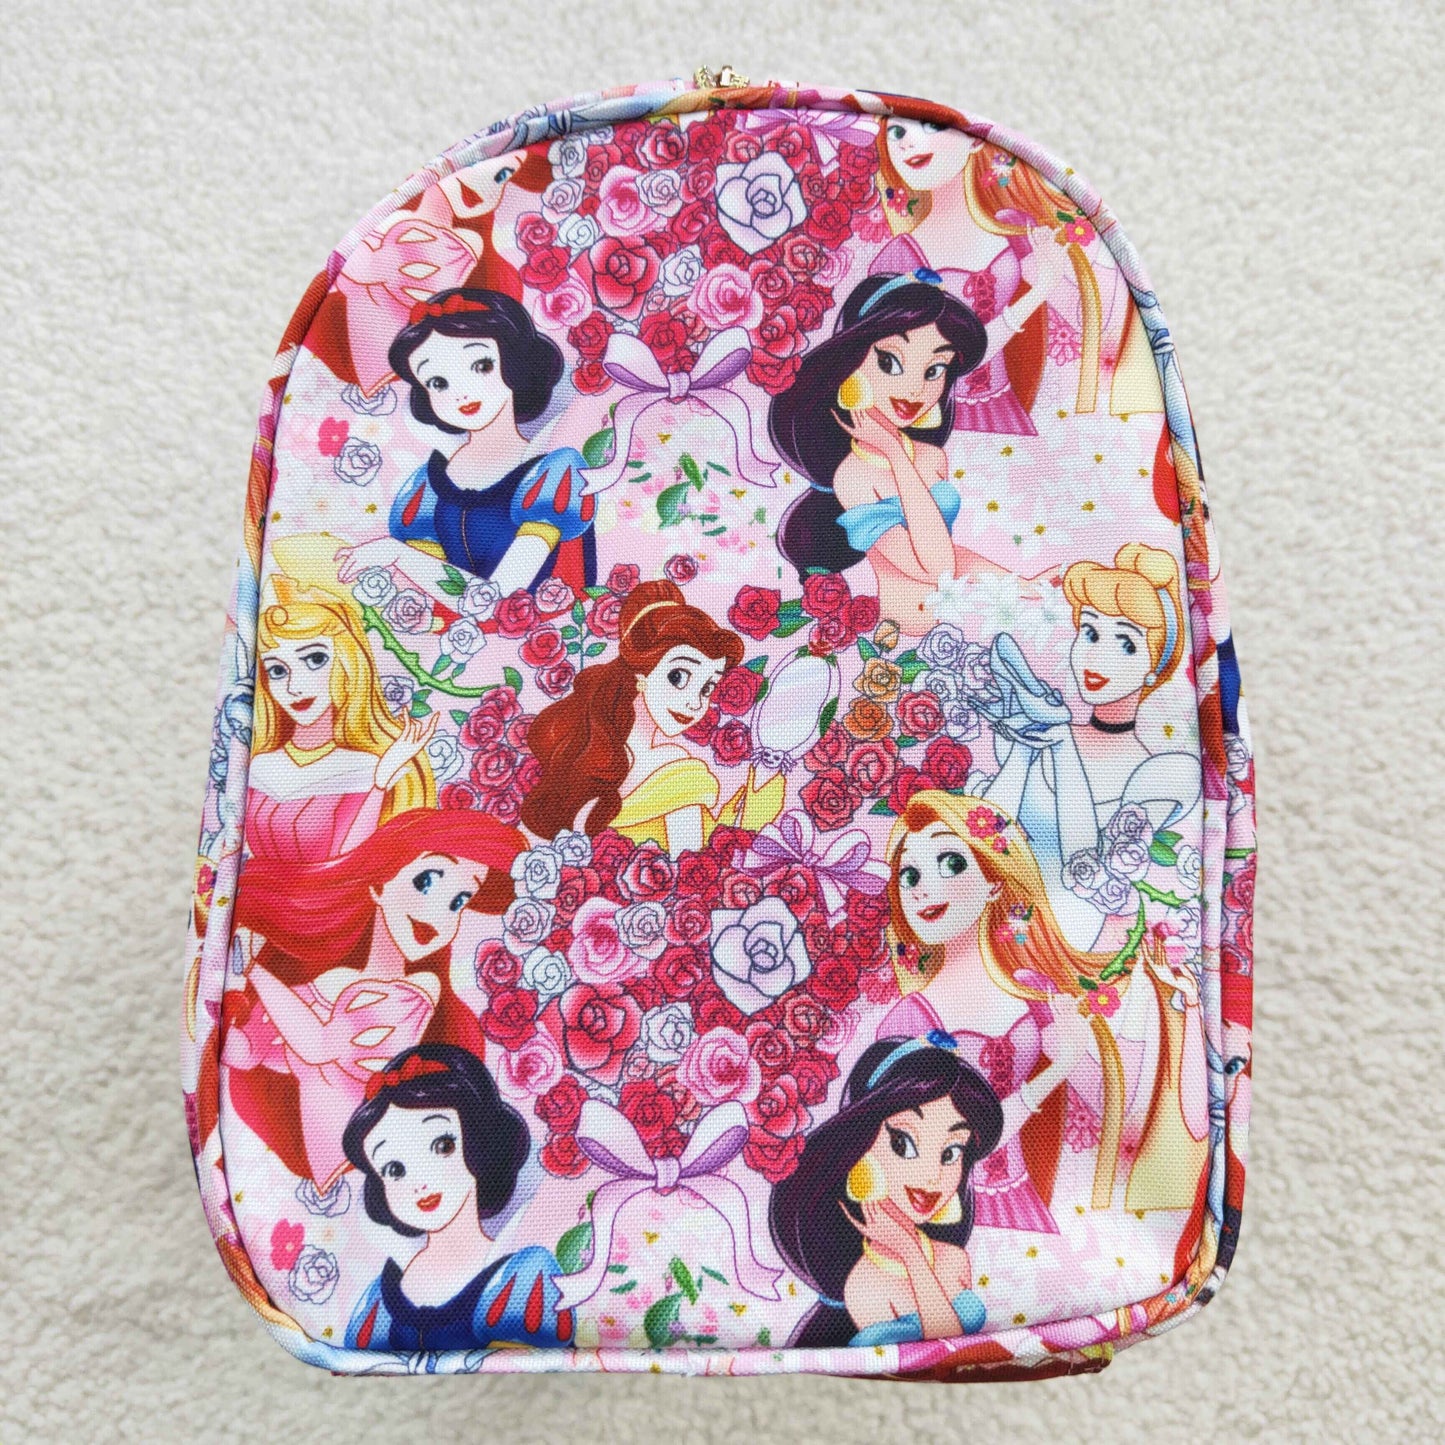 wholesale girls cartoon duffel bag